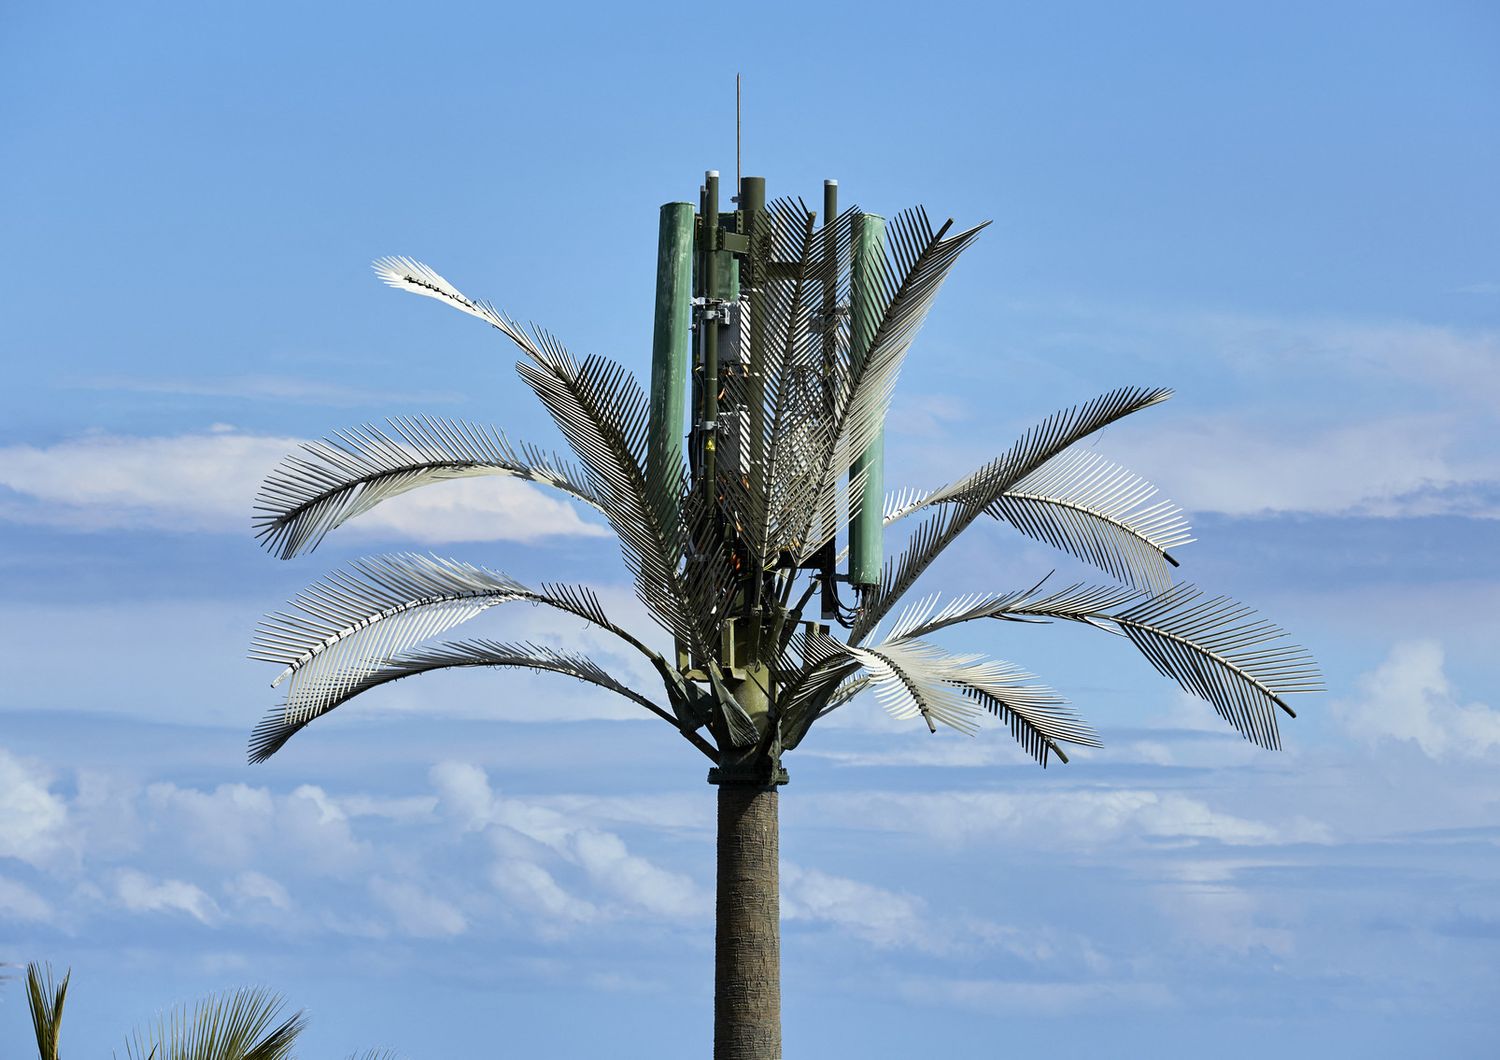 Un'antenna per telefonia mobile camuffata da palma